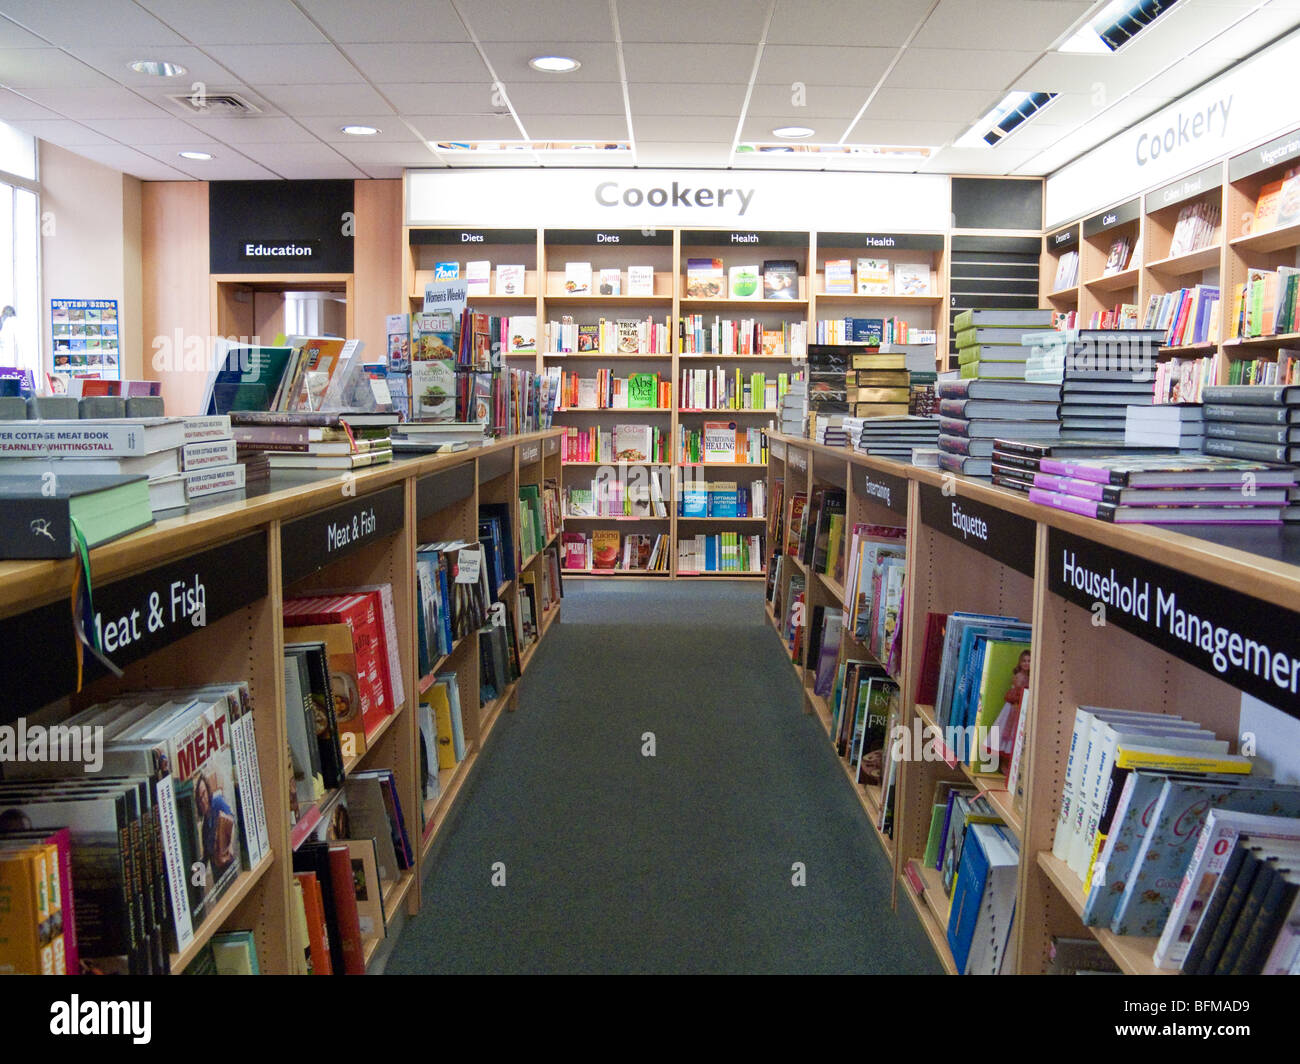 cookery books on shelves, Foyles bookshop, London, England, UK Stock Photo